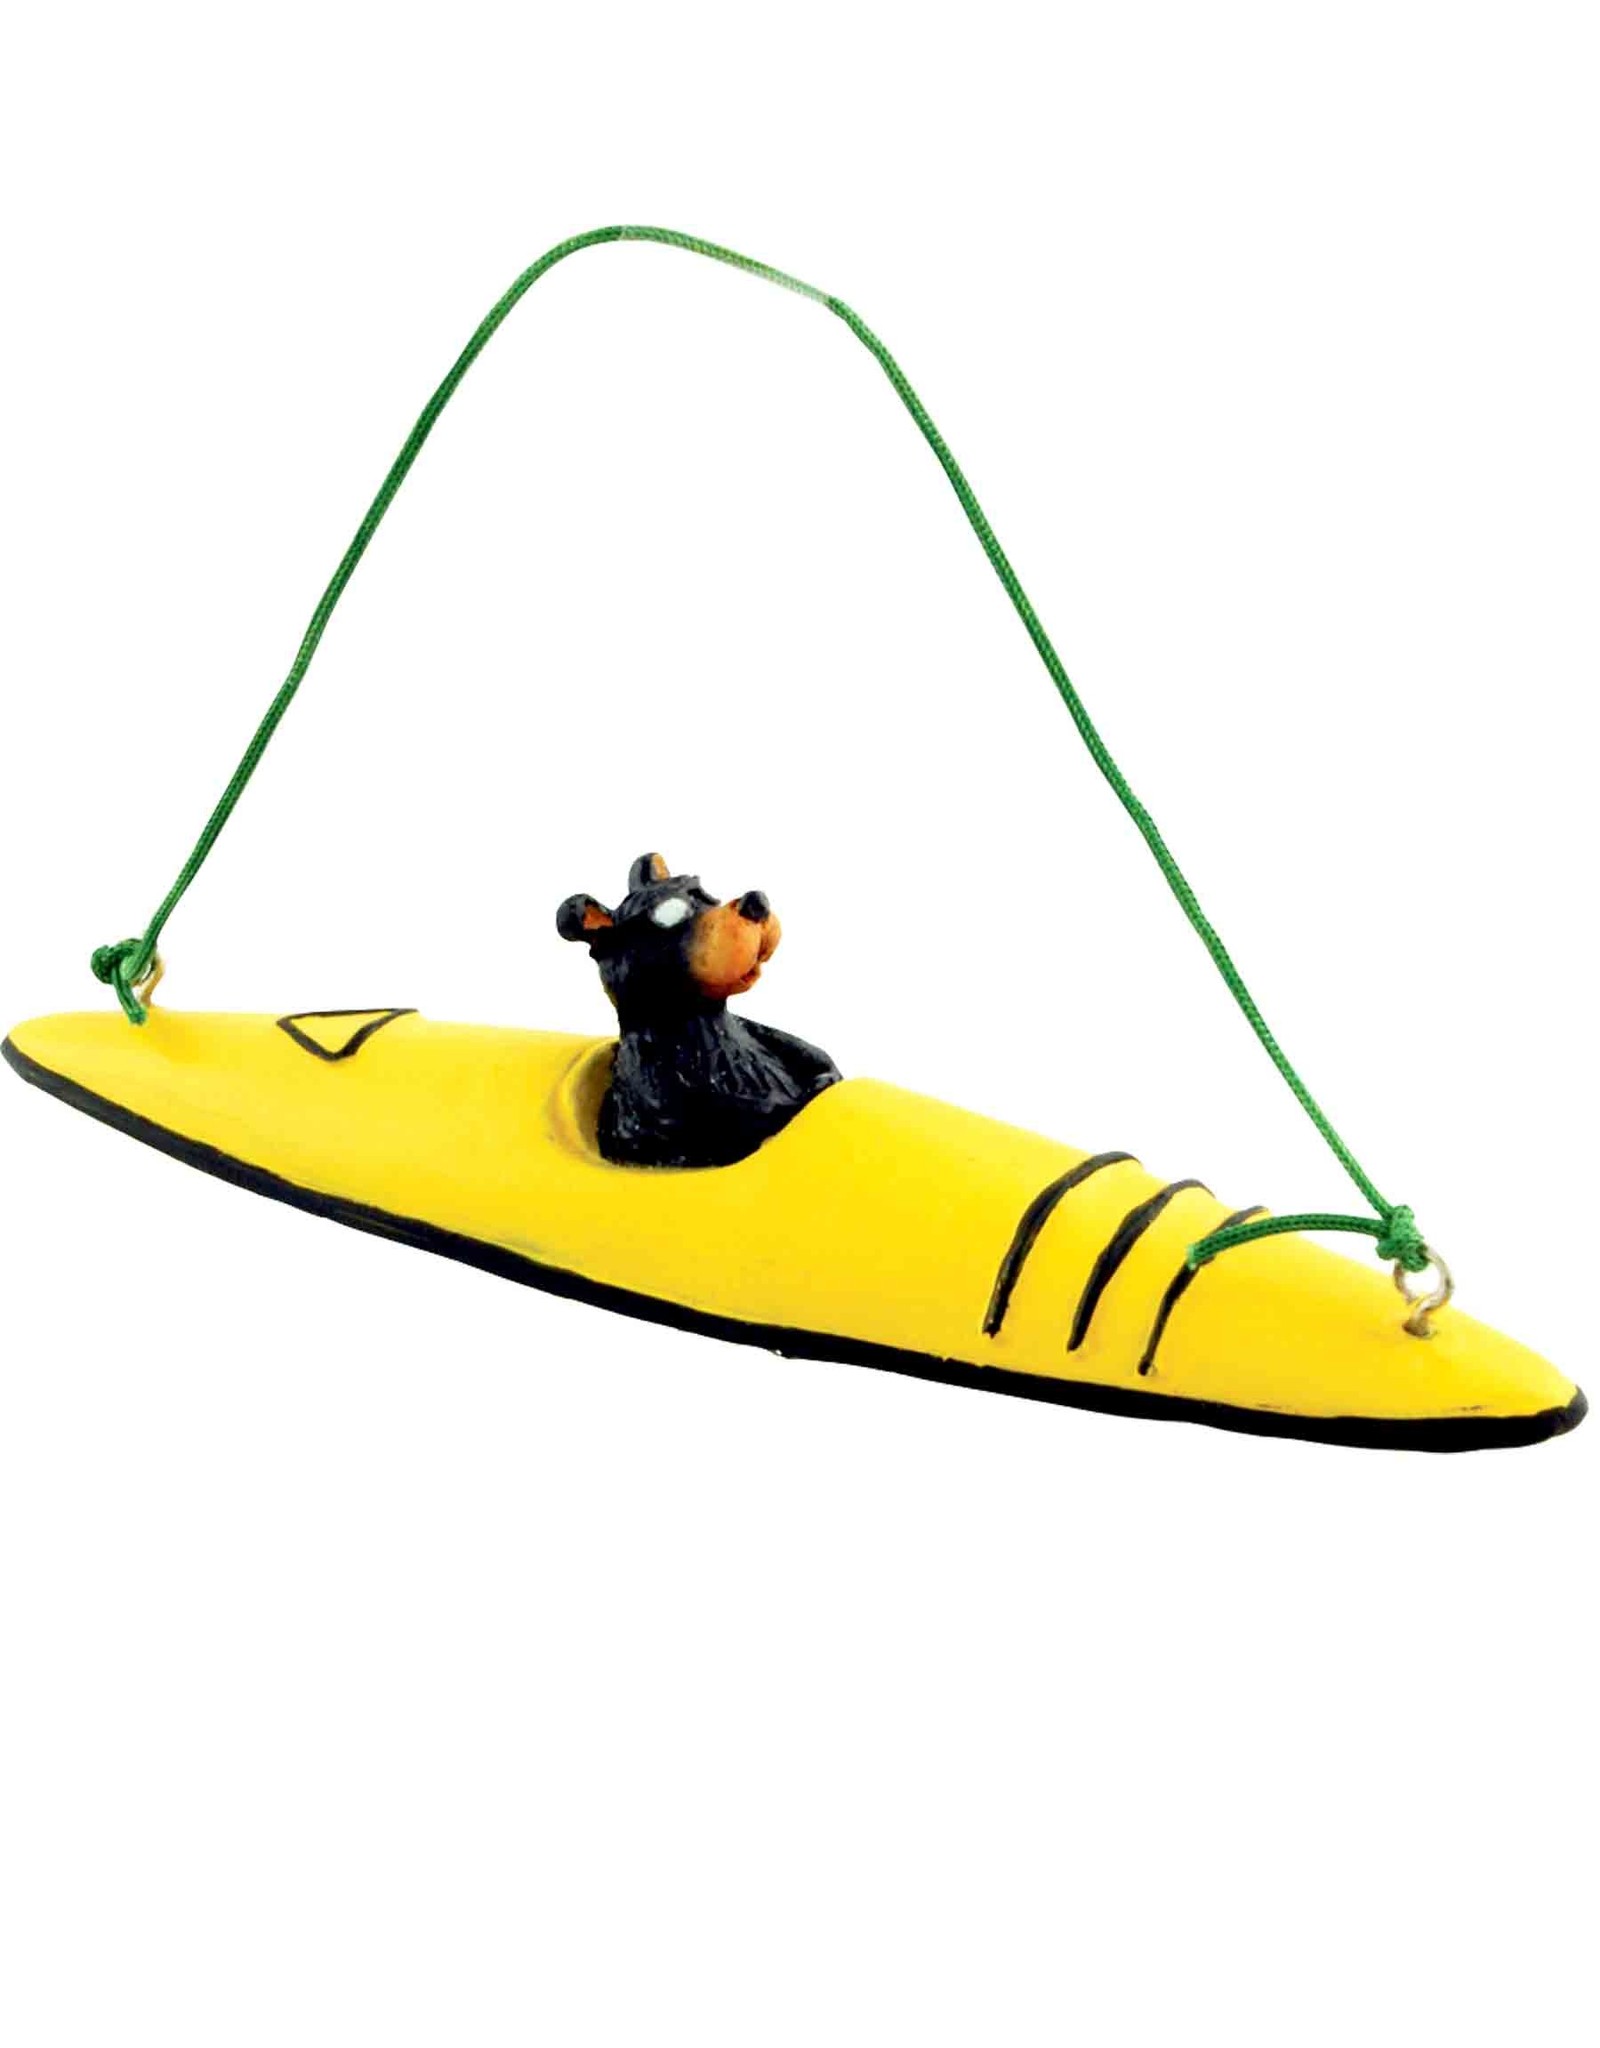 Willie Bear Kayaking Ornament 12/Box single